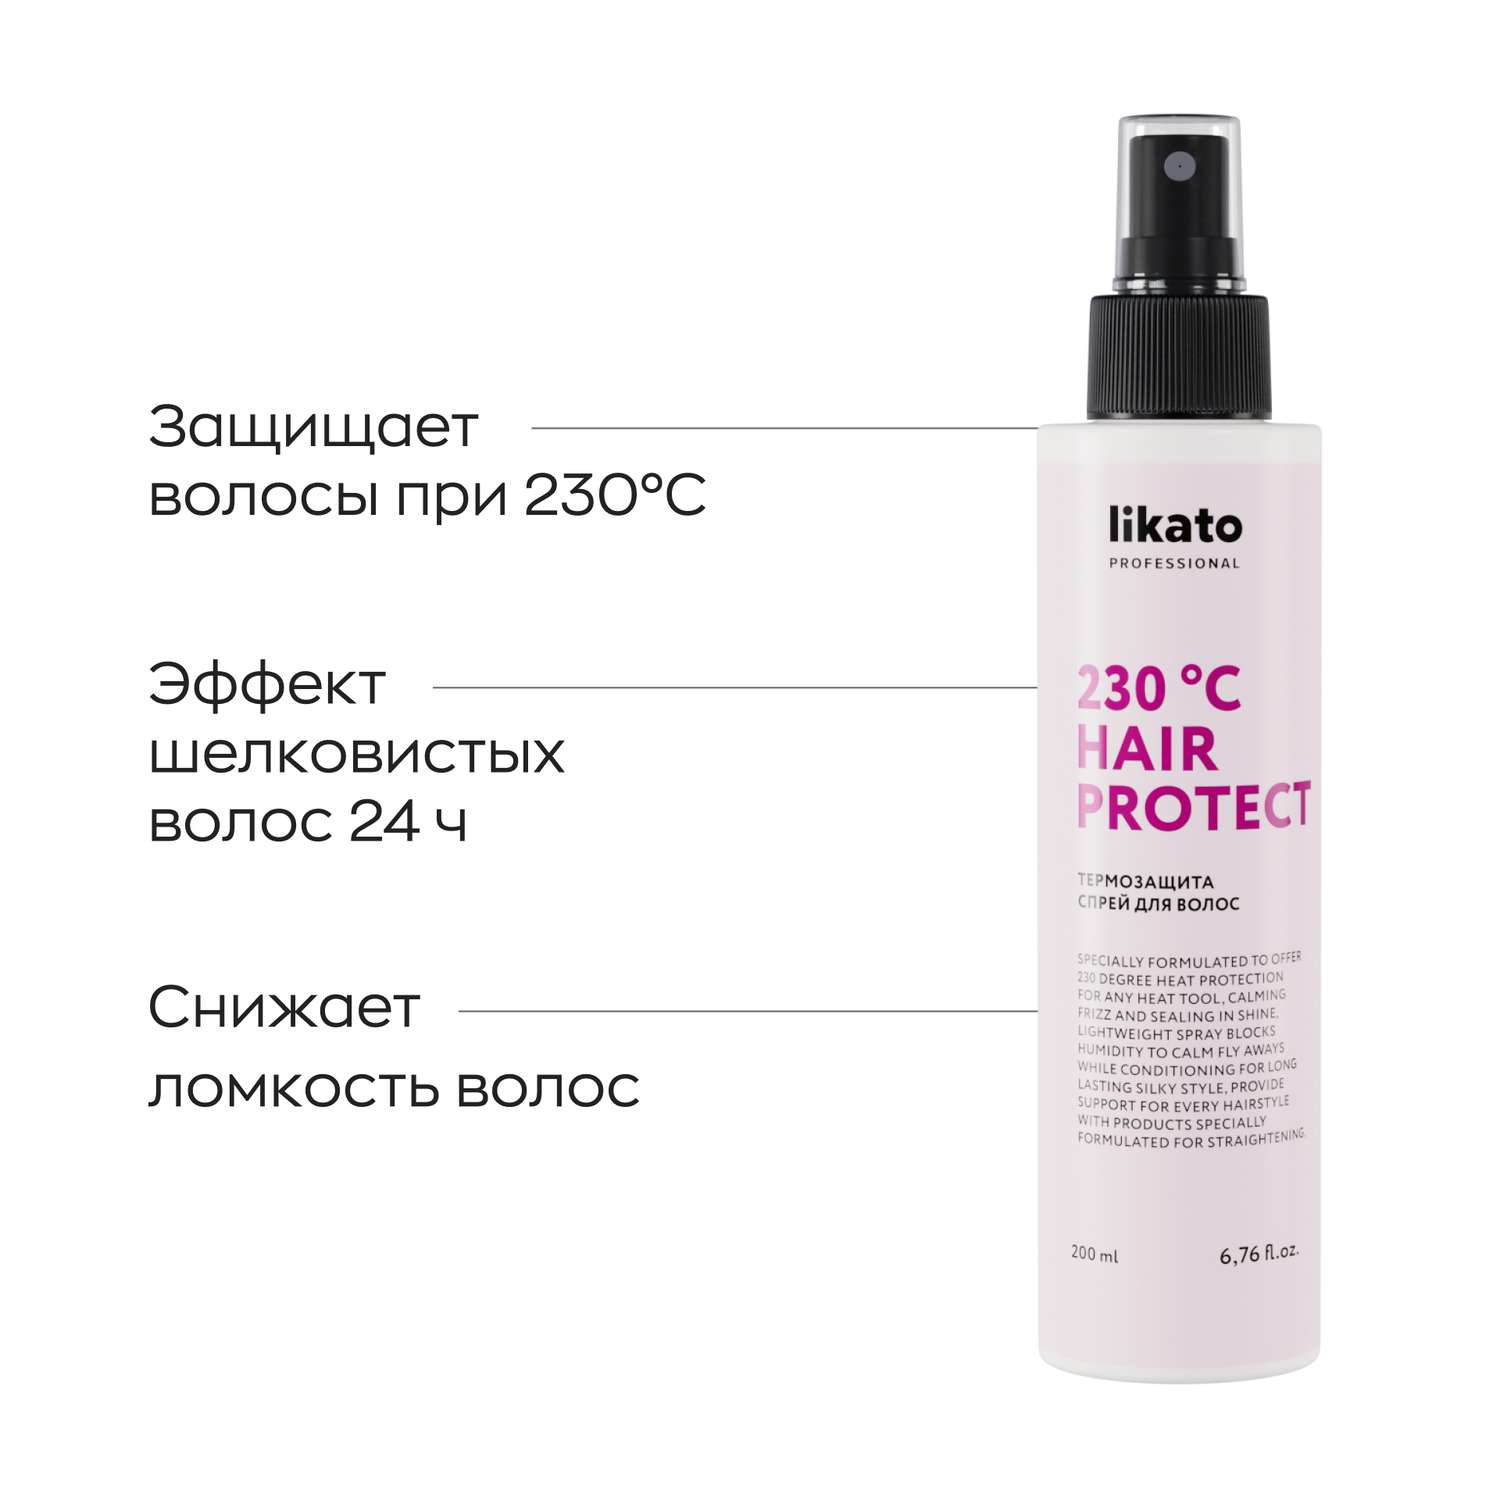 MAGIC Термозащита Likato Professional спрей для волос 200 мл - фото 1